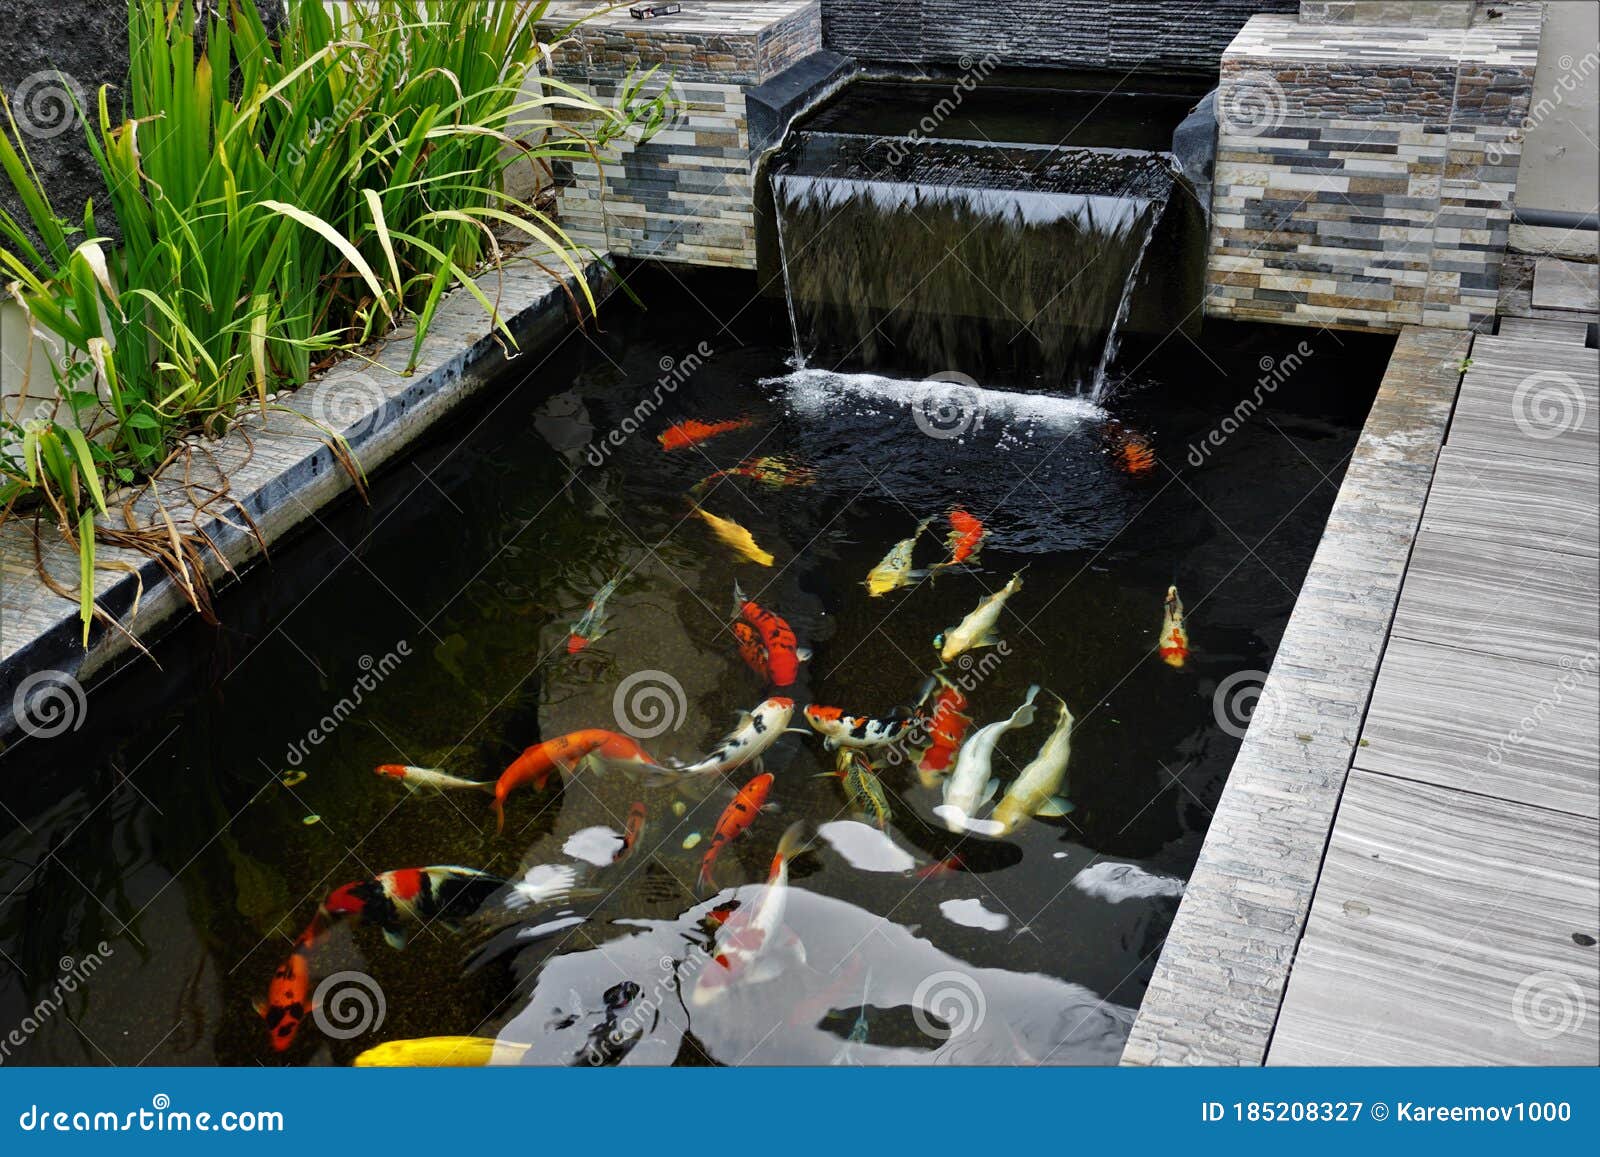 Minimalist Koi Fish Pond Stock Image Image Of Asian 185208327